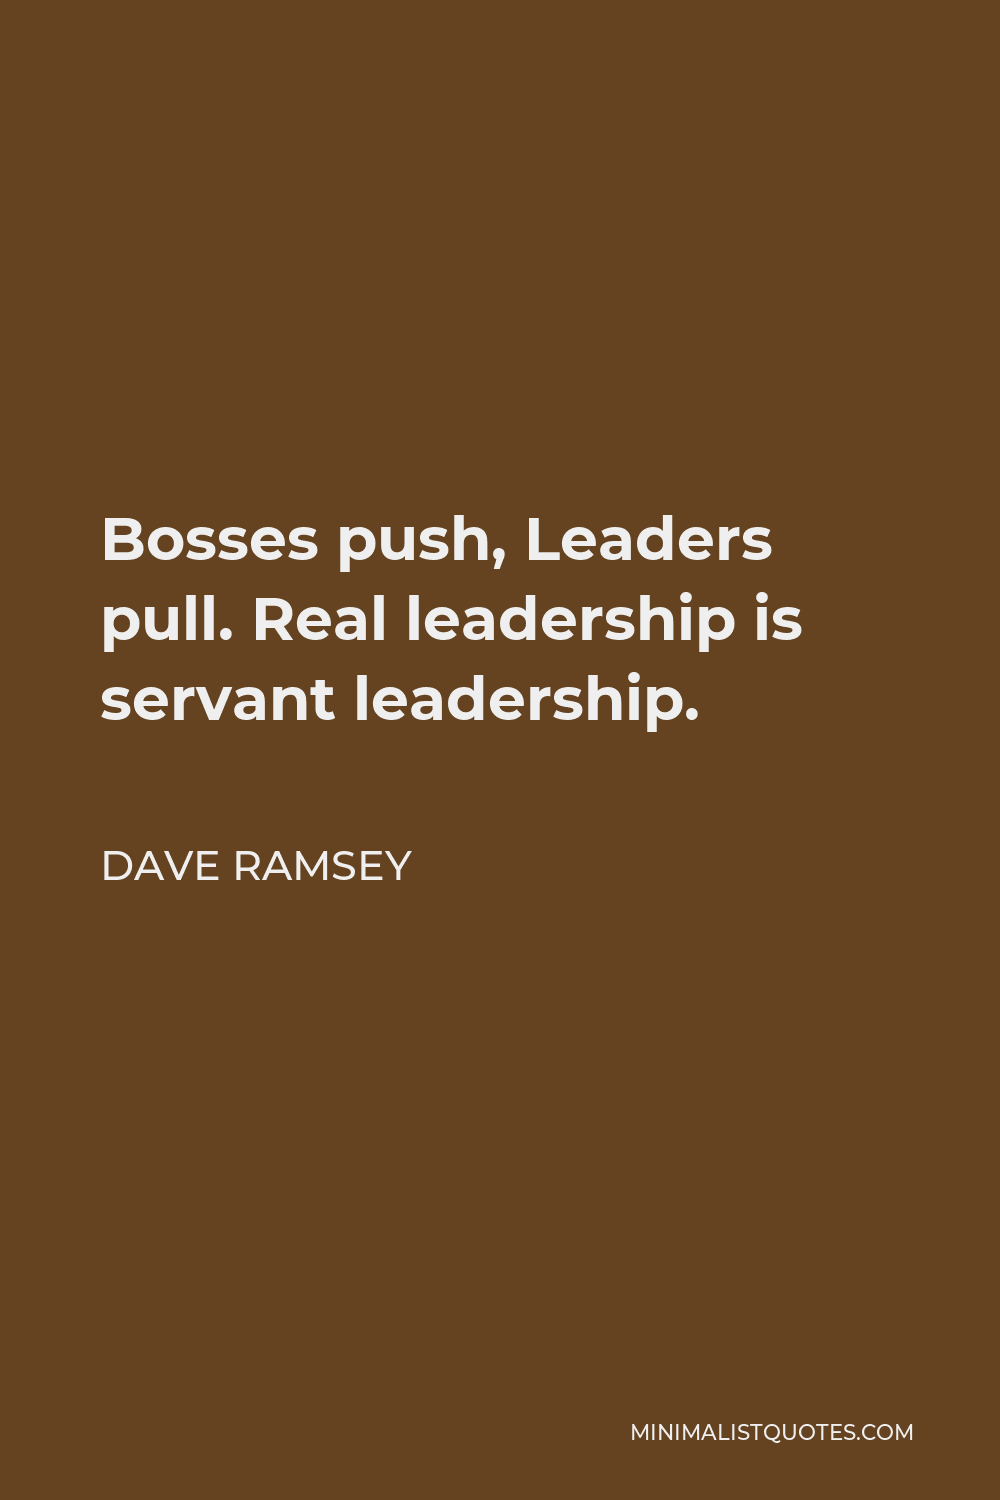 Dave Ramsey Quote - Bosses push, Leaders pull. Real leadership is servant leadership.